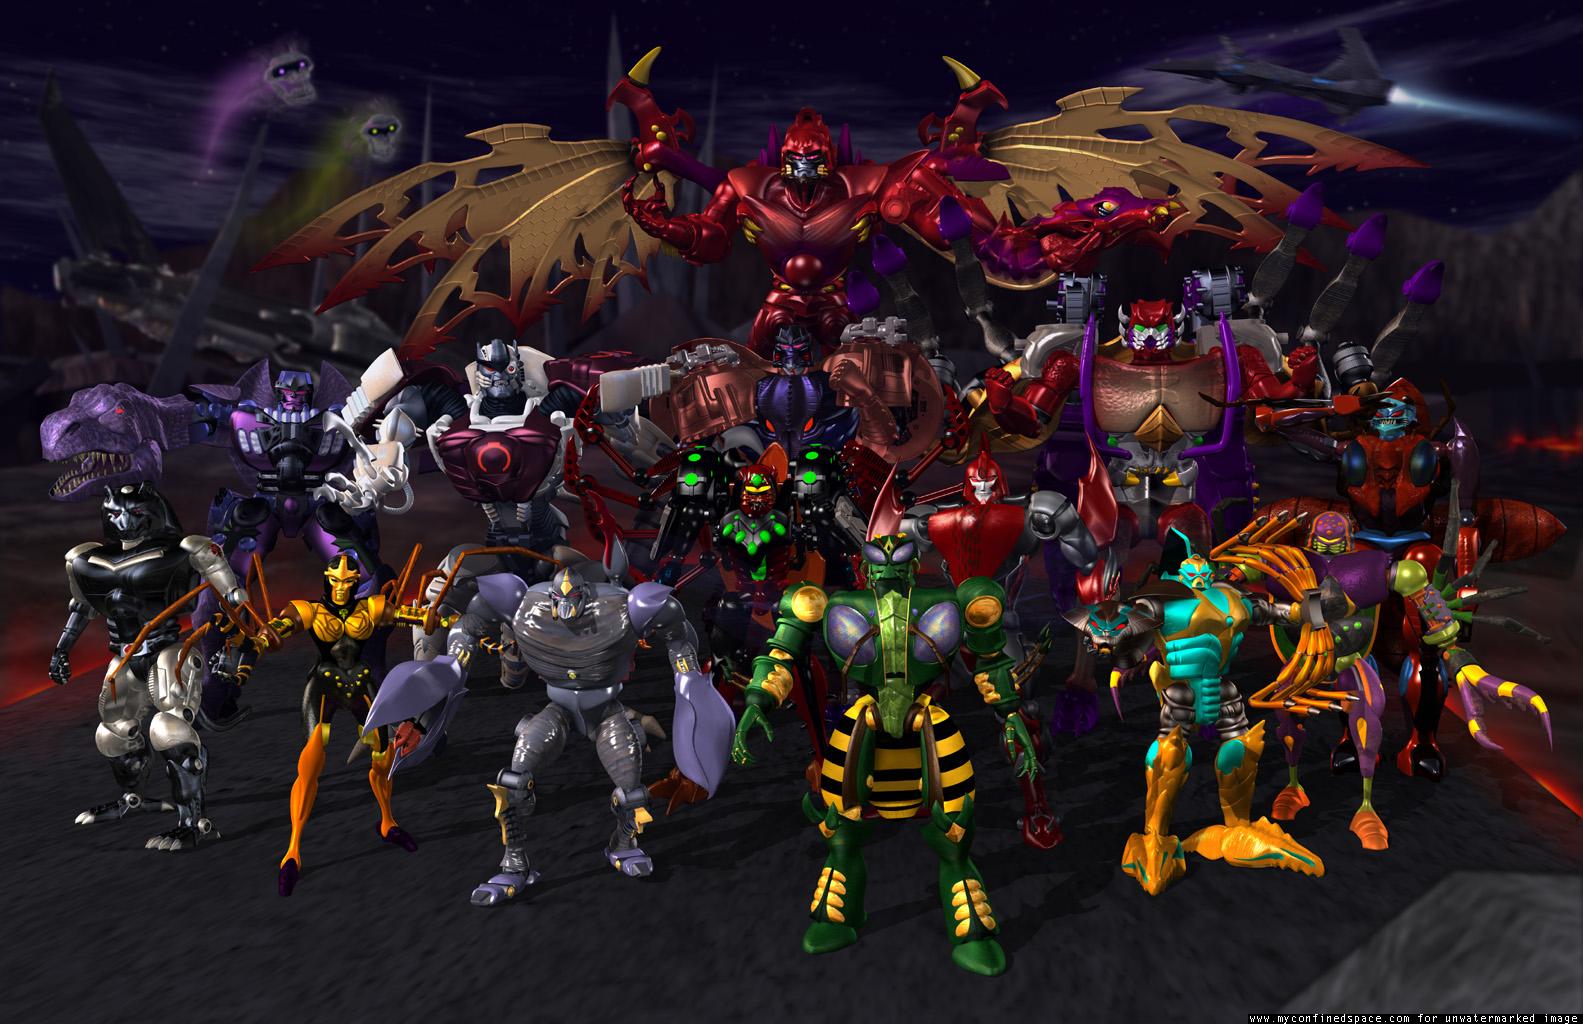 Beast Wars - Transformers